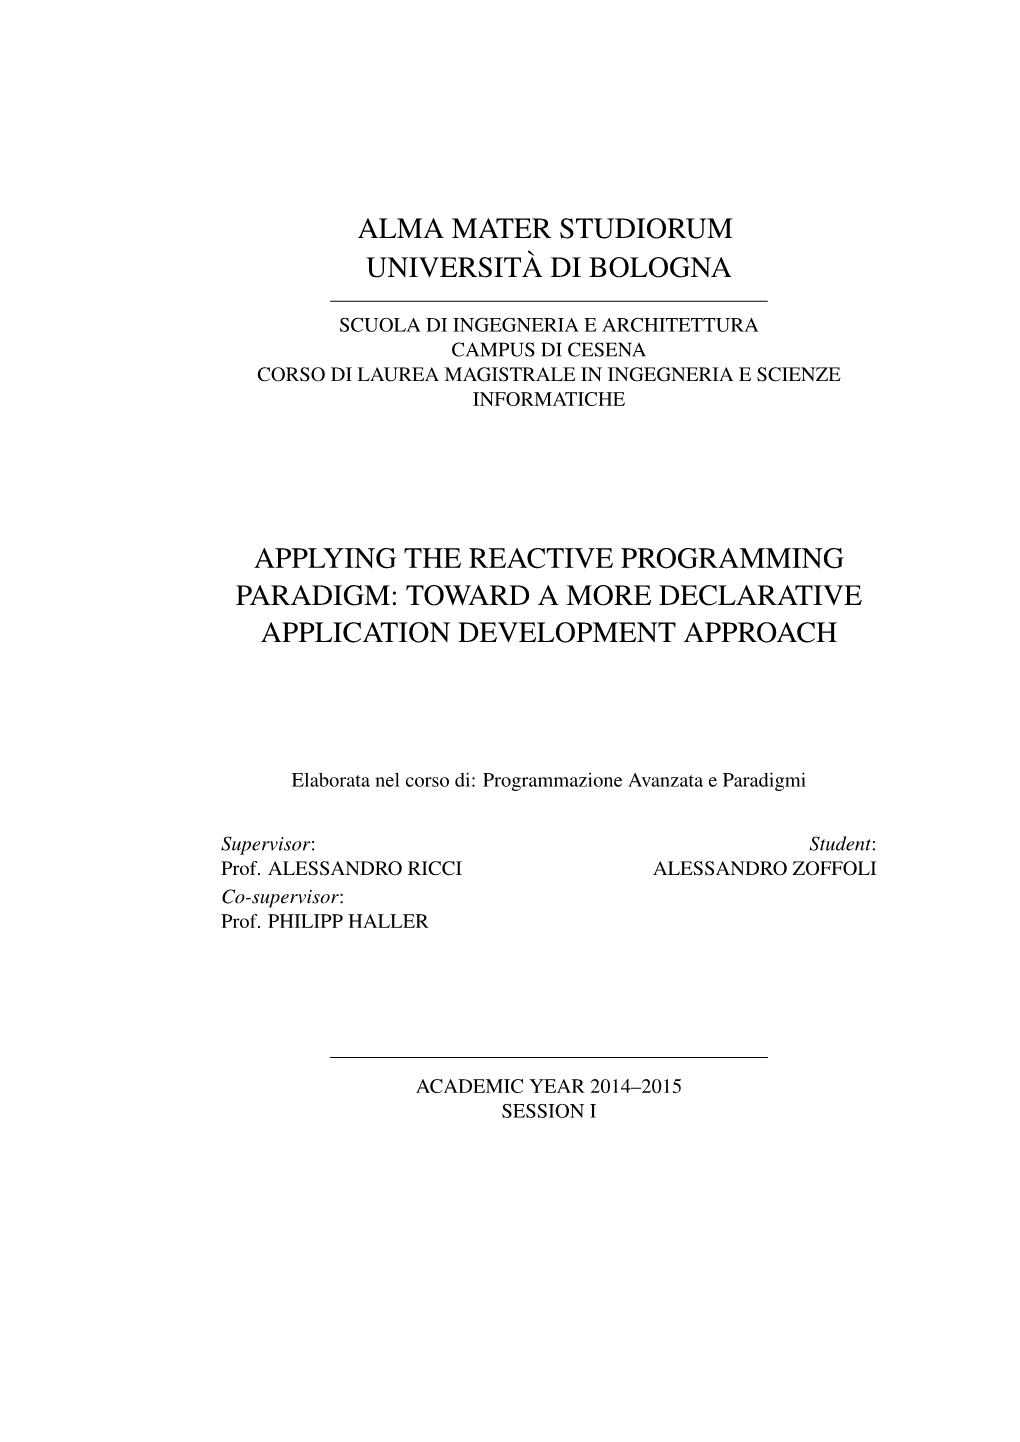 Applying the Reactive Programming Paradigm: Toward a More Declarative Application Development Approach